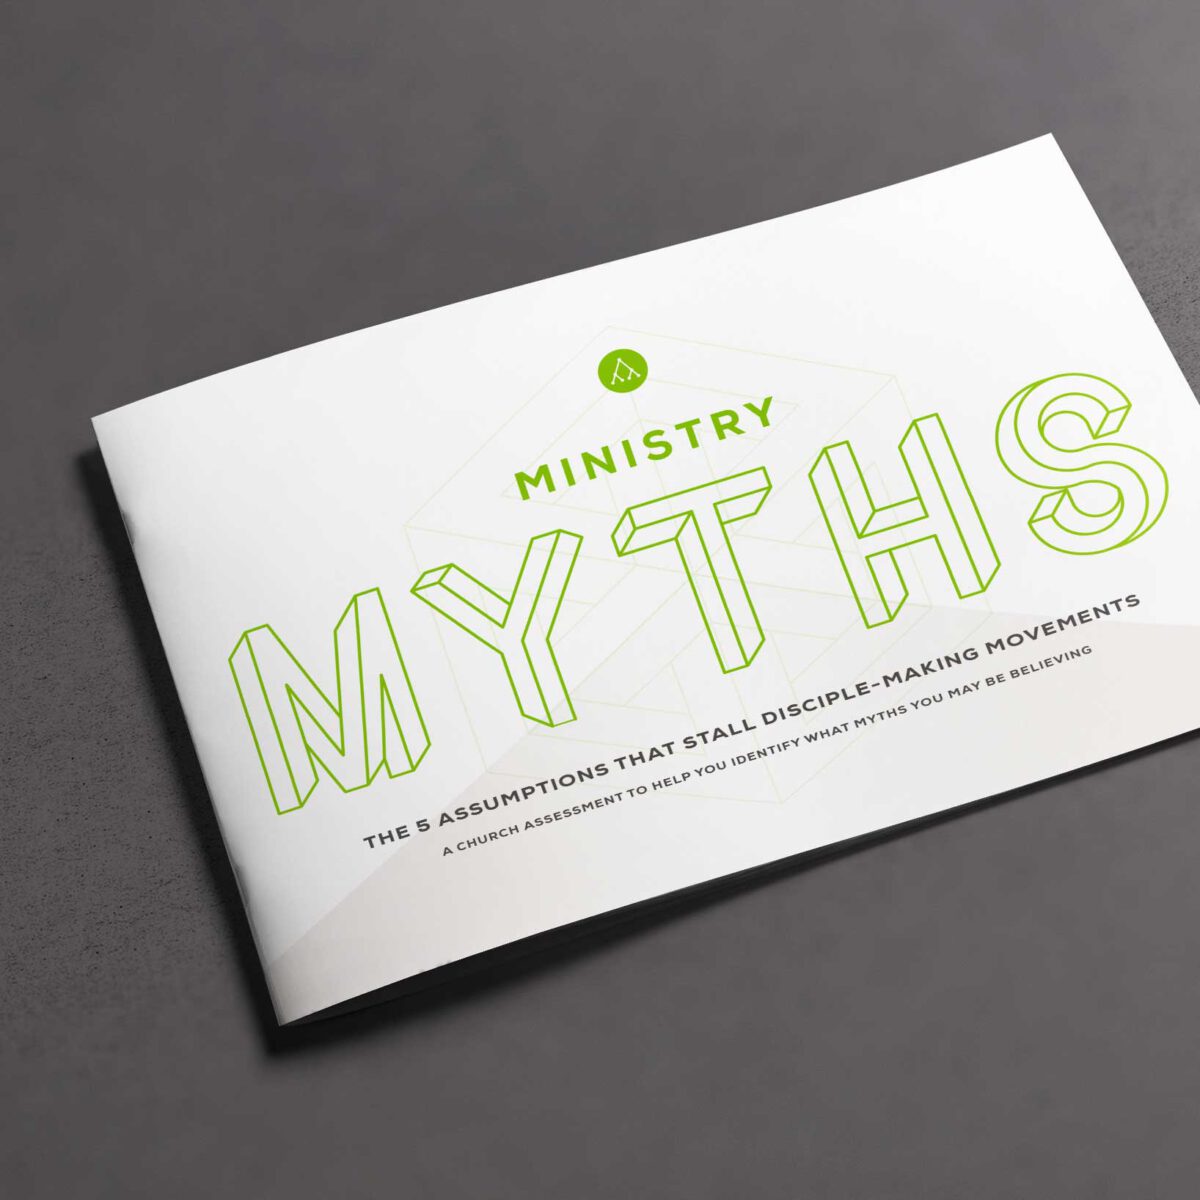 Ministry Myths